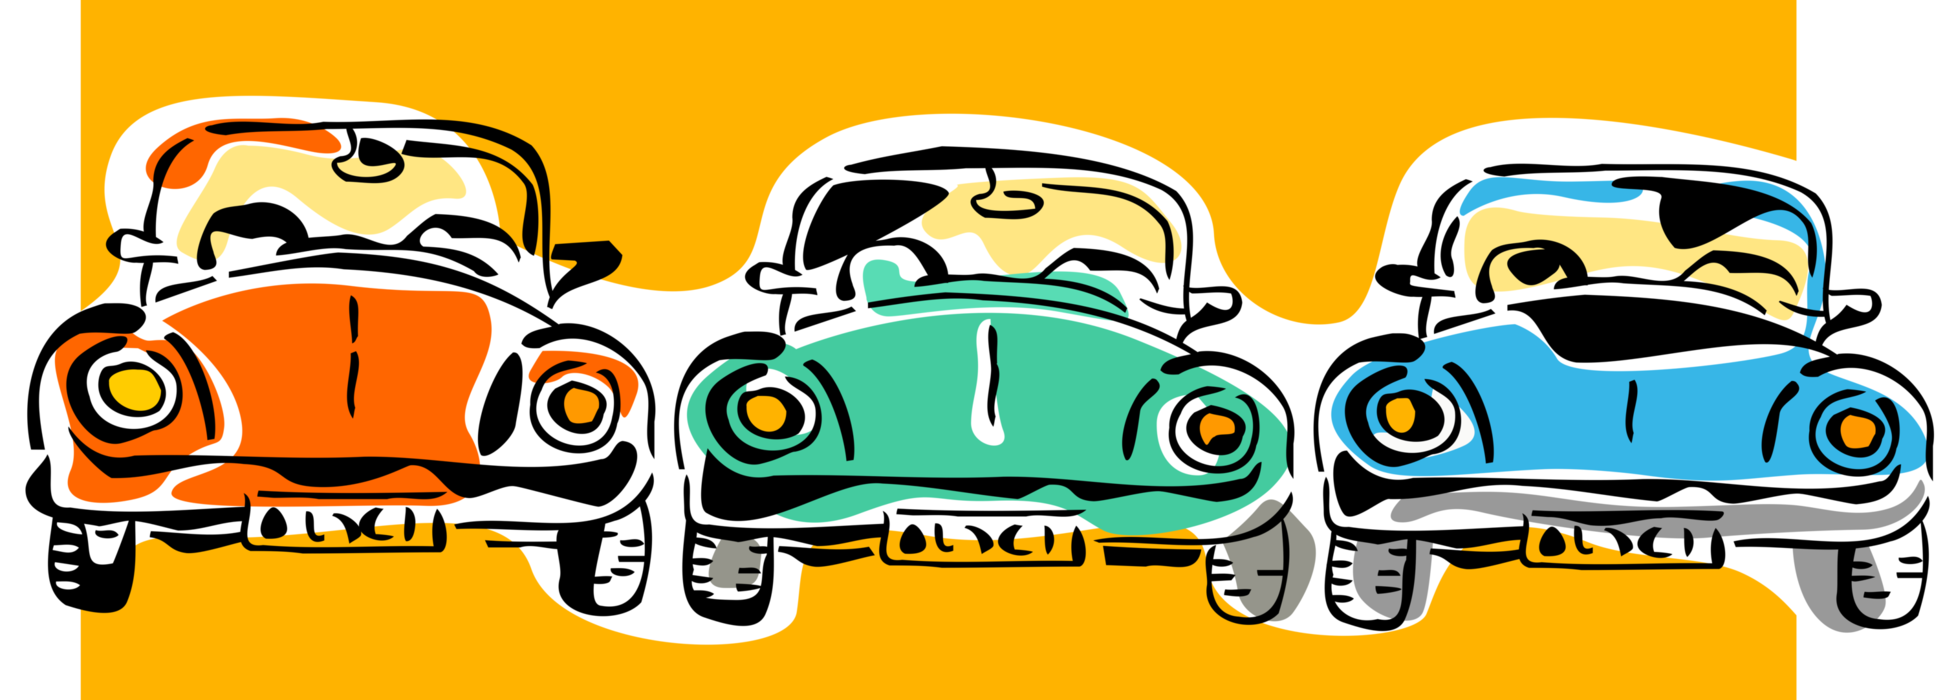 Vector Illustration of Volkswagen Beetle Motor Vehicle Automobile Car